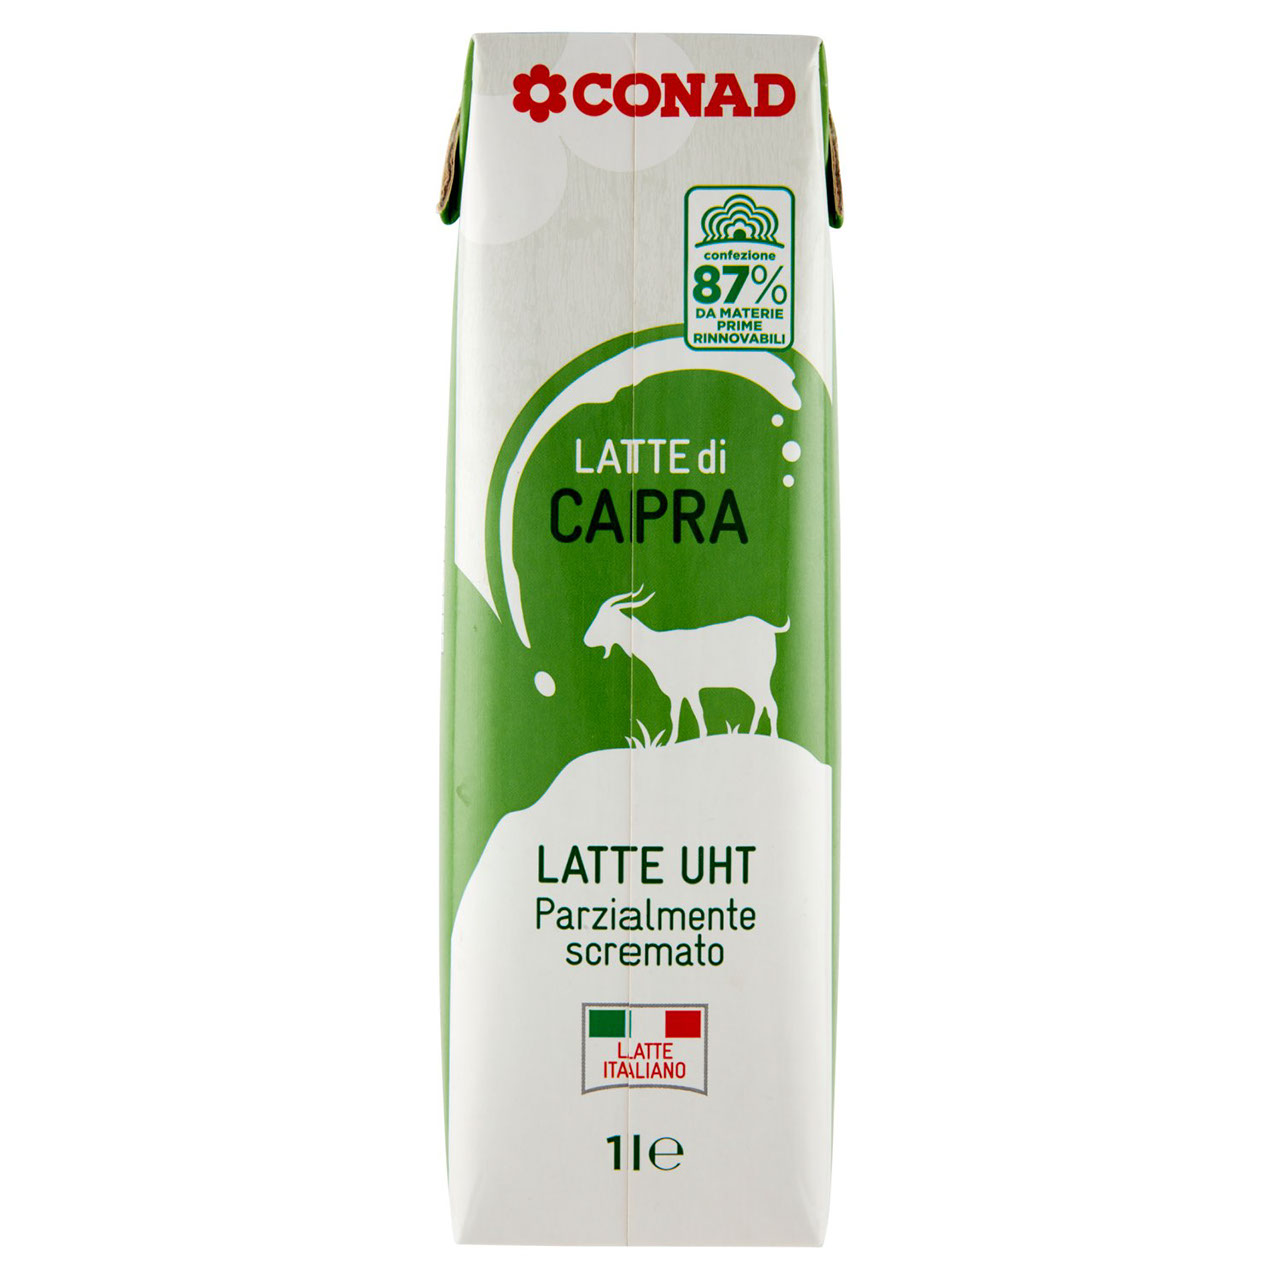 Latte di capra - Conad - 1 L